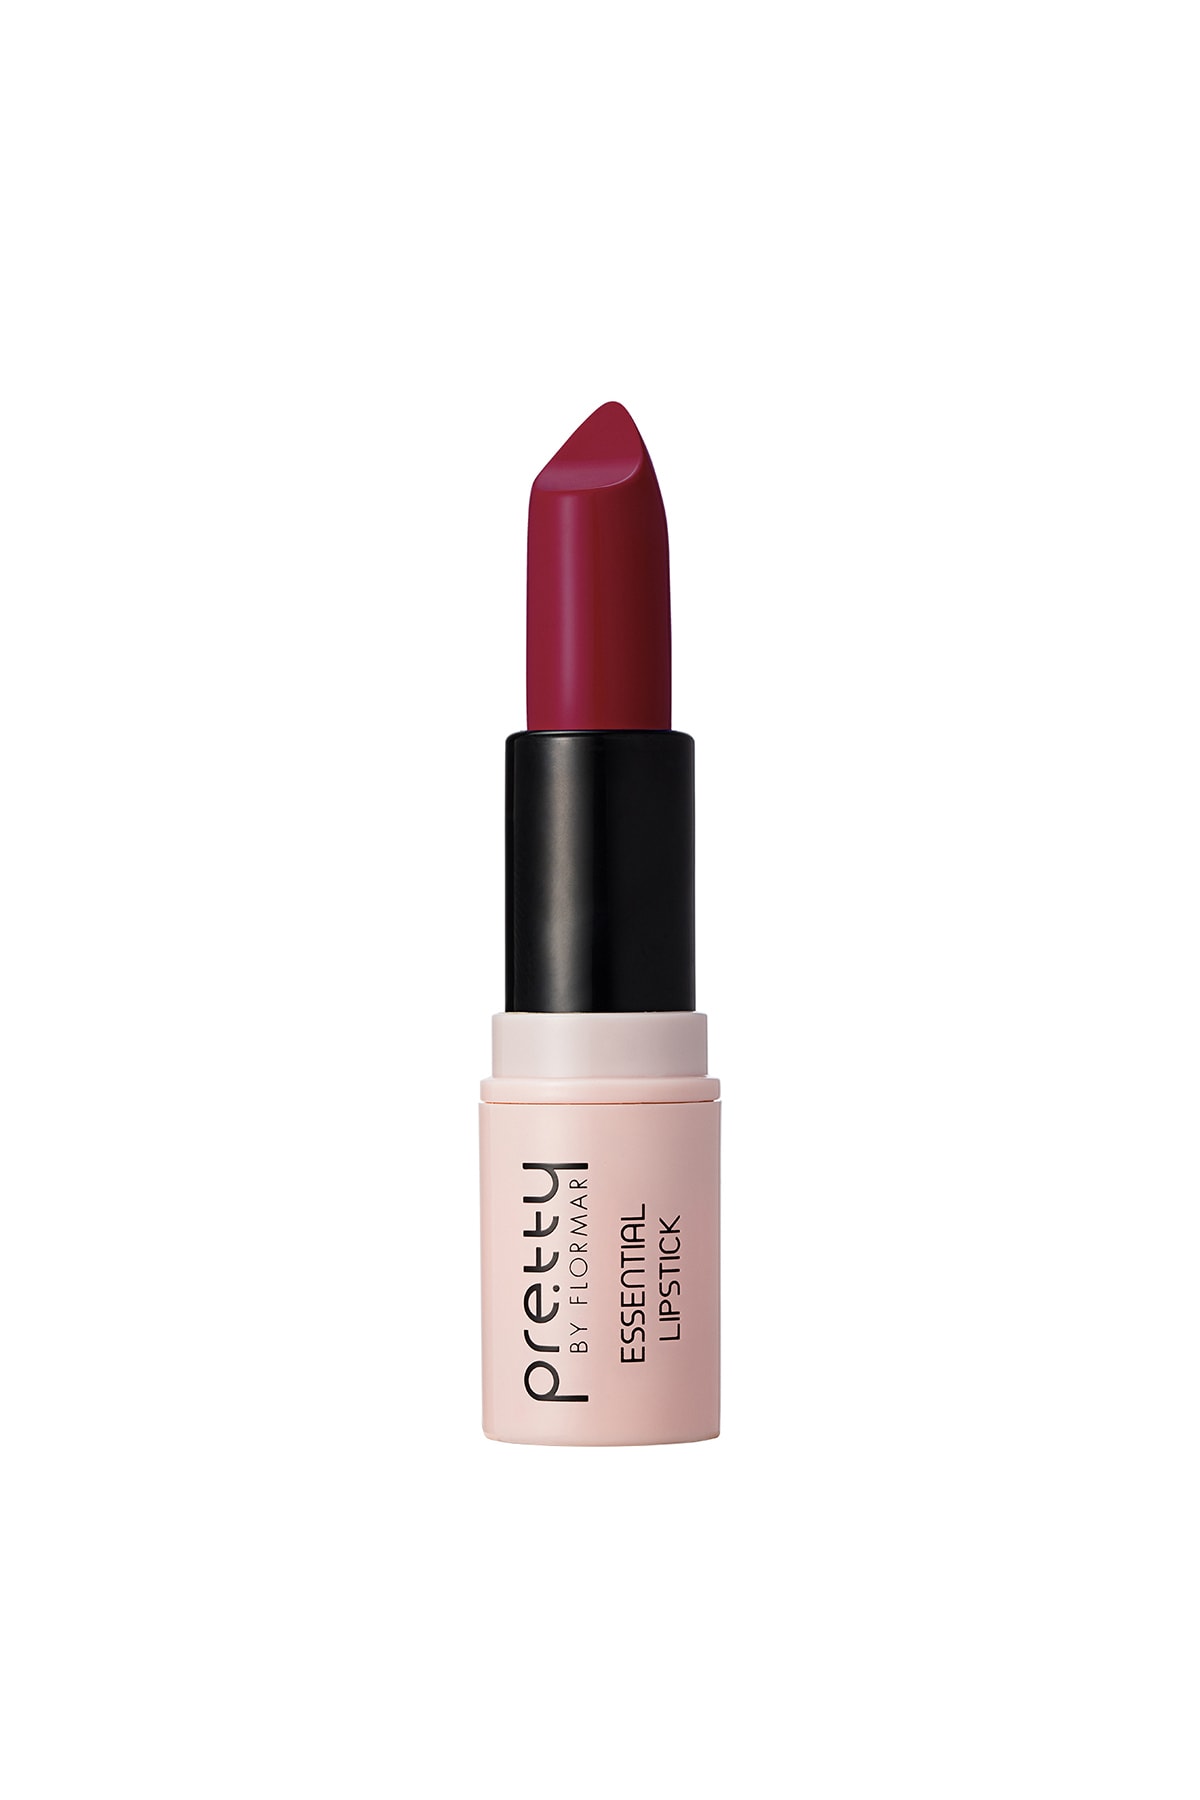 Flormar Ruj - Pretty By Essential Lipstick 027 Dark Cherry 33000028-027